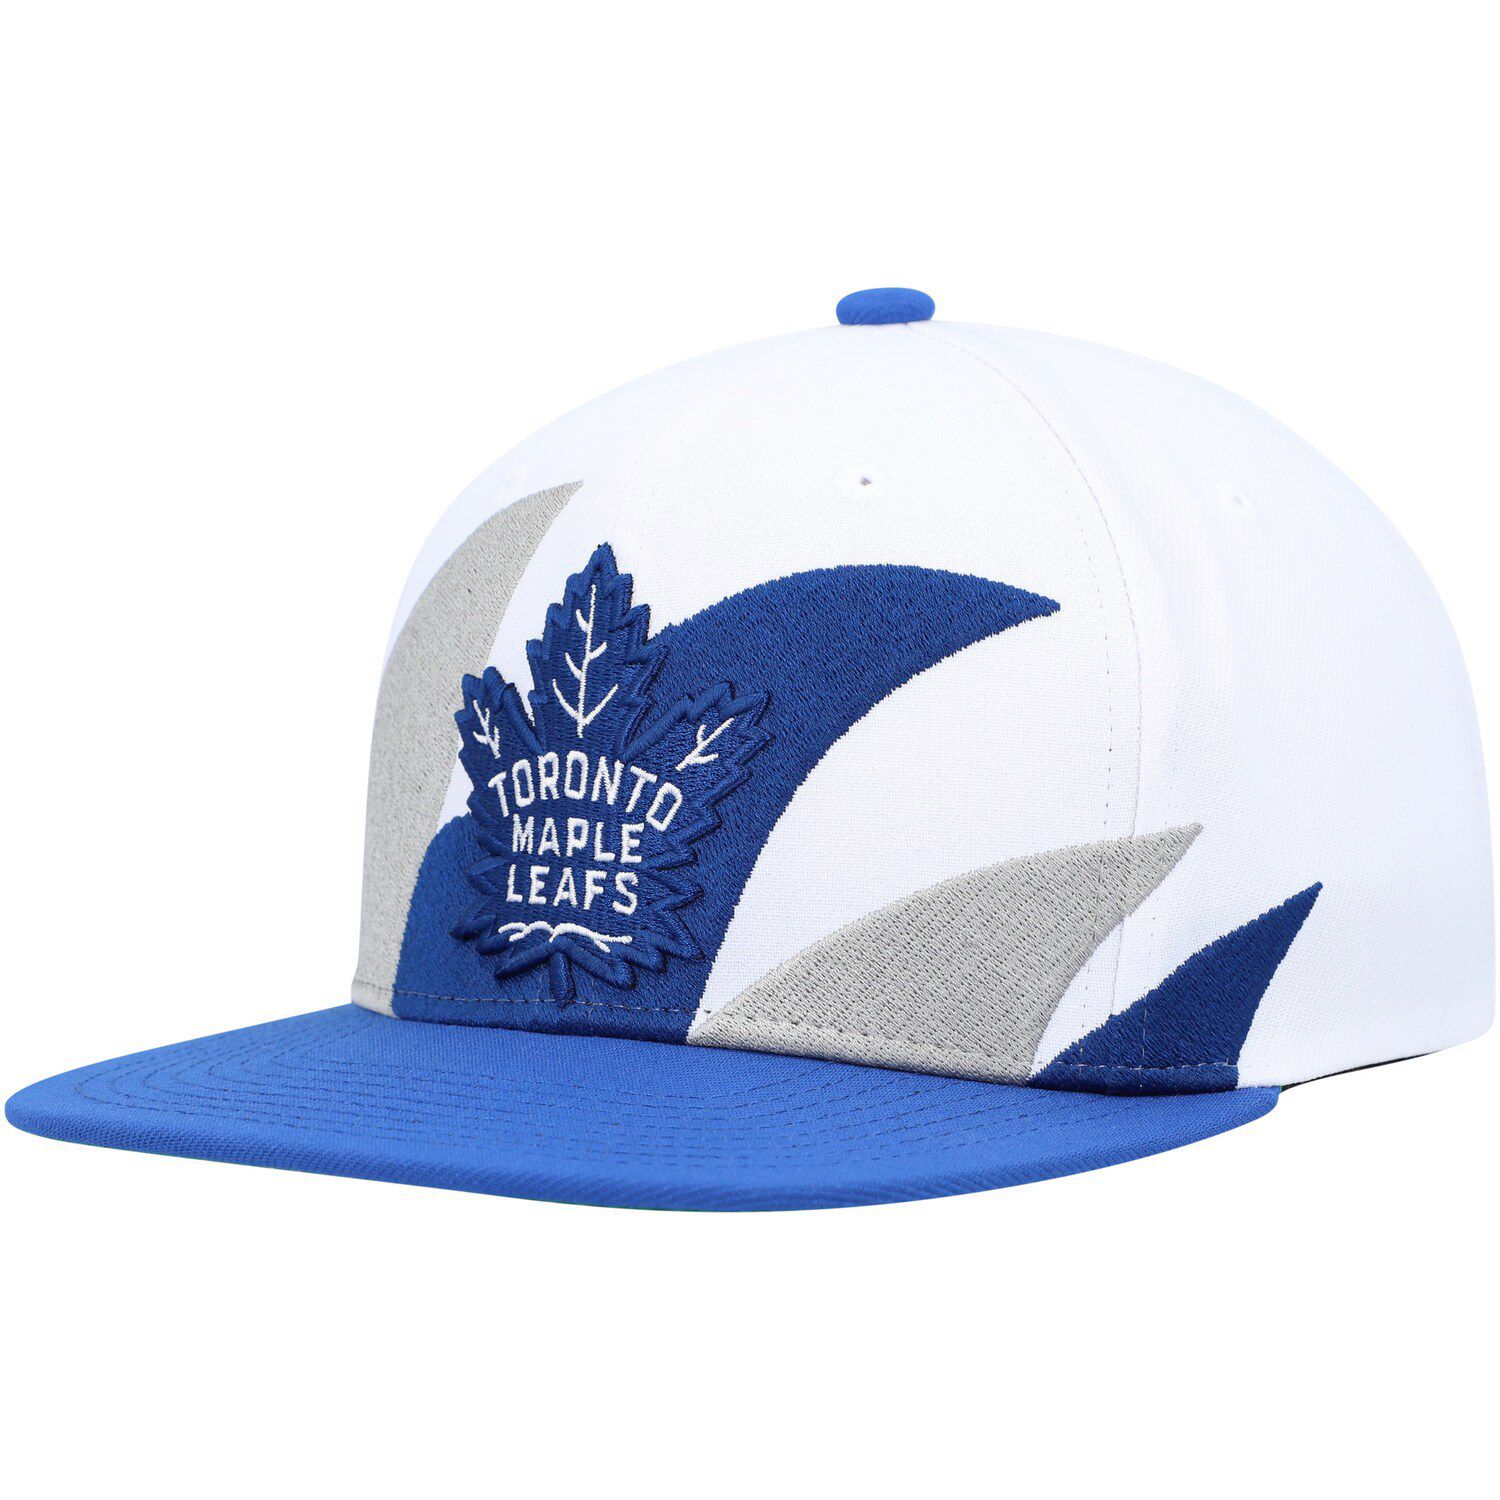 New York Rangers Fanatics Branded Vintage Sport Resort Adjustable Hat - Blue